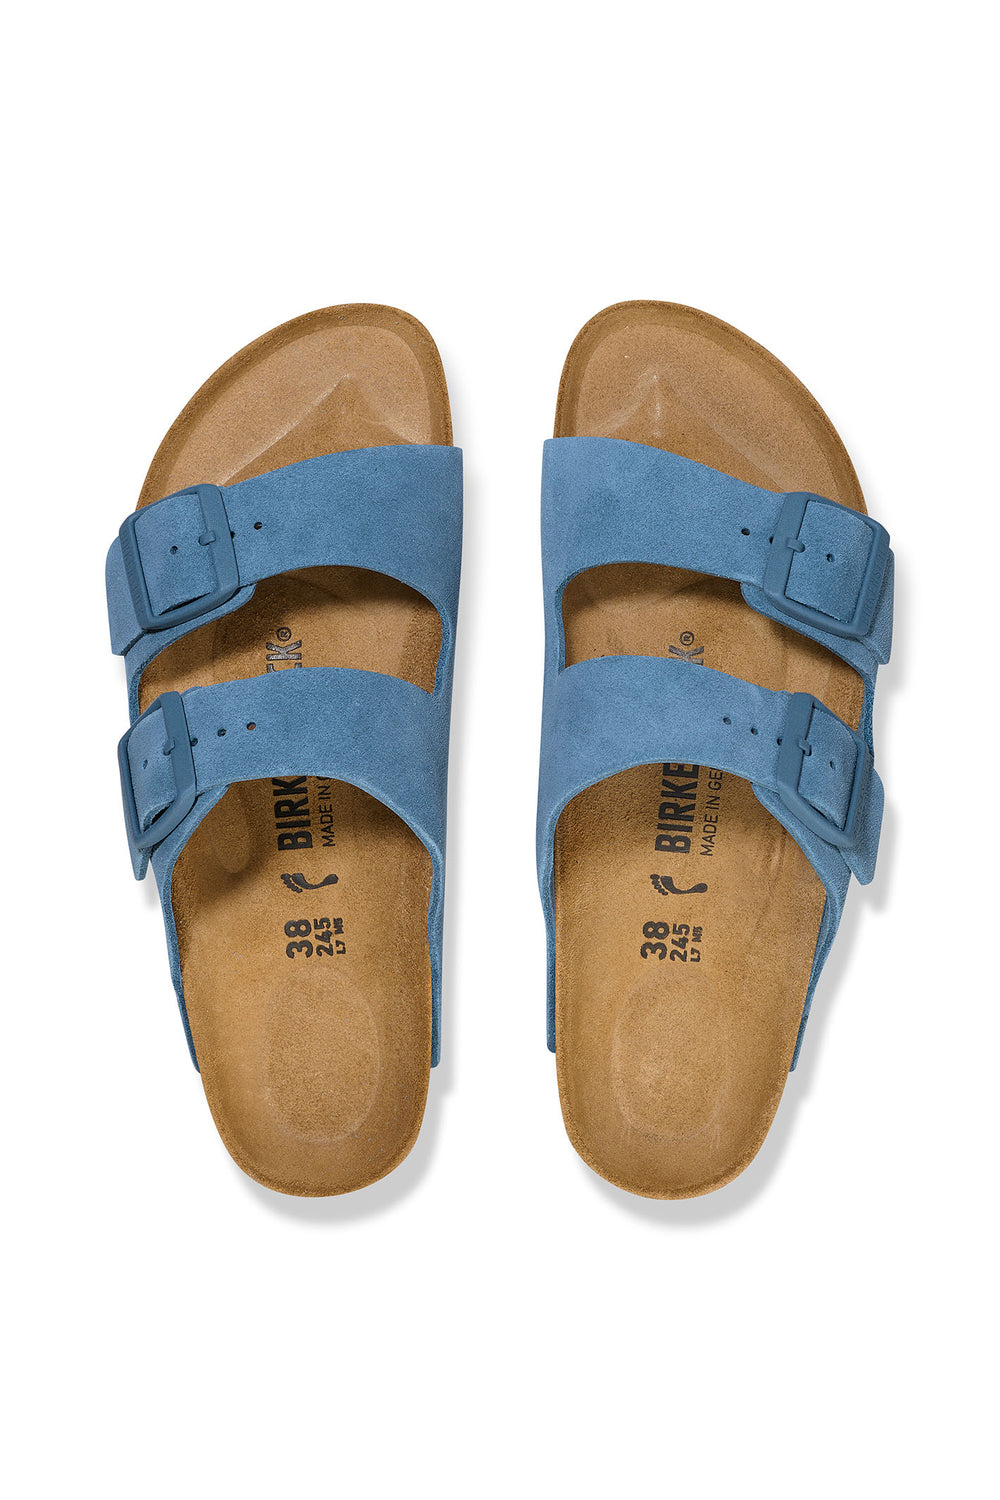 Birkenstock Arizona 1026820 Elemental Blue Suede Narrow Fit Sandal - Shirley Allum Boutique